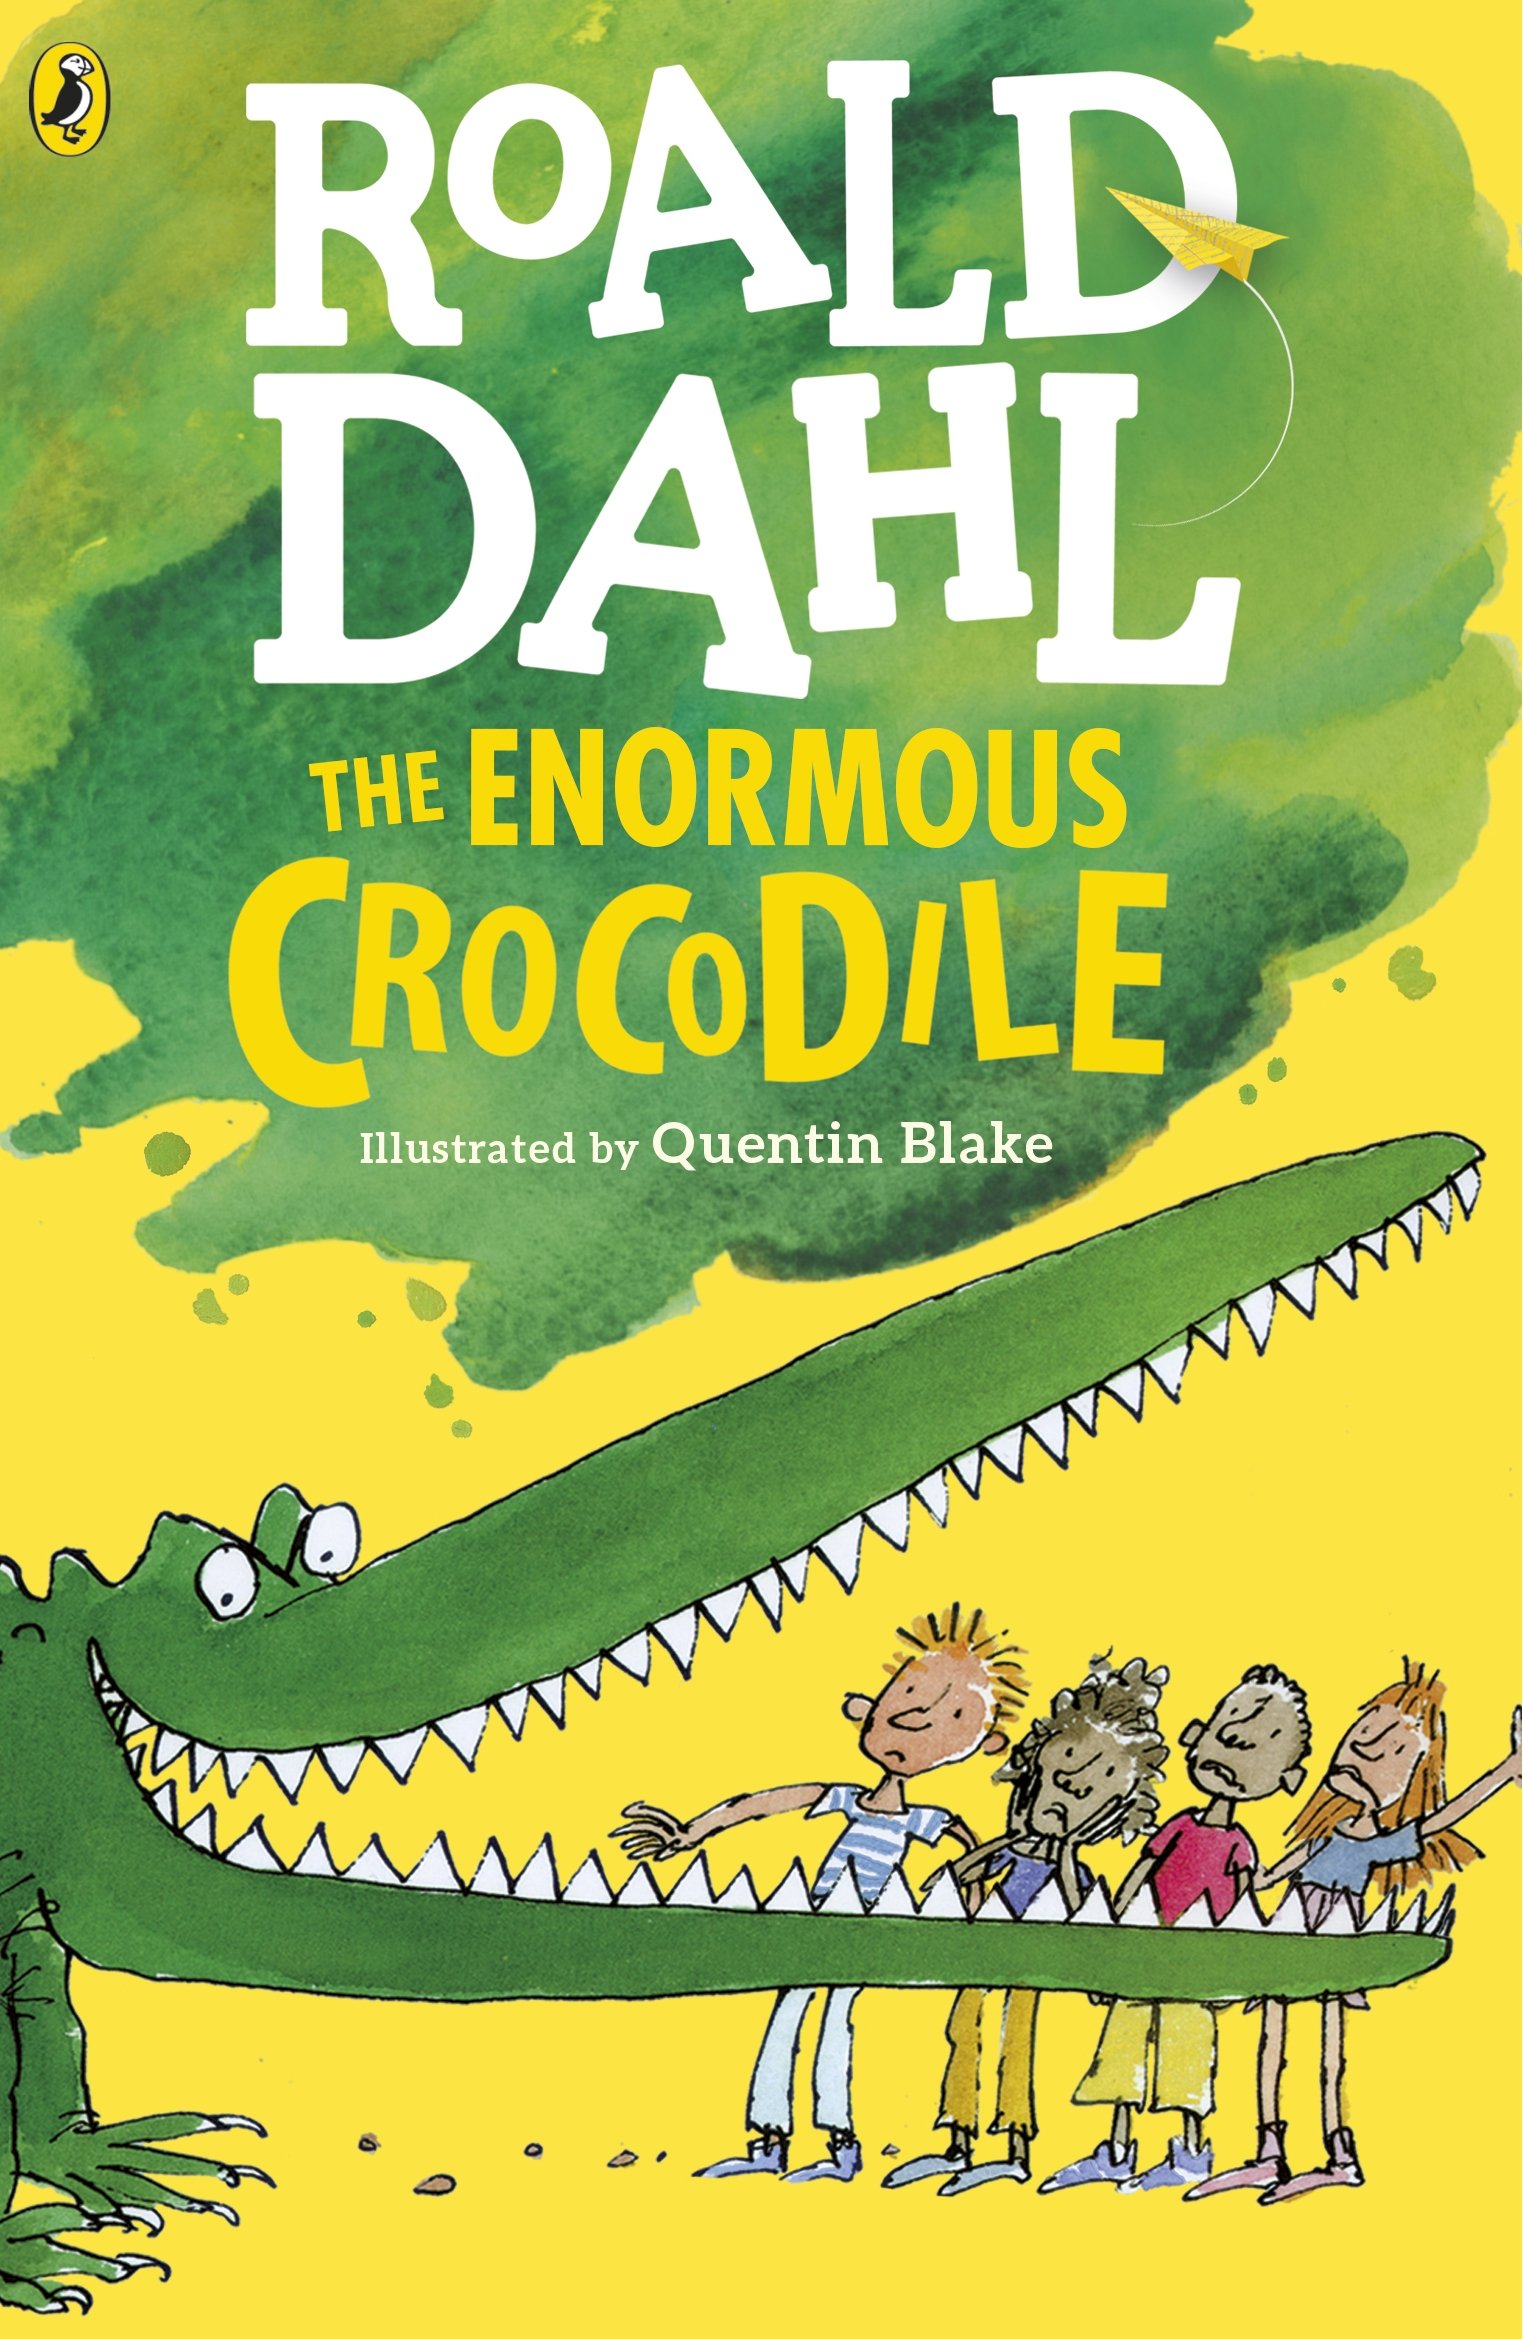 [PDF] Download The Enormous Crocodile by Roald Dahl Book pdf